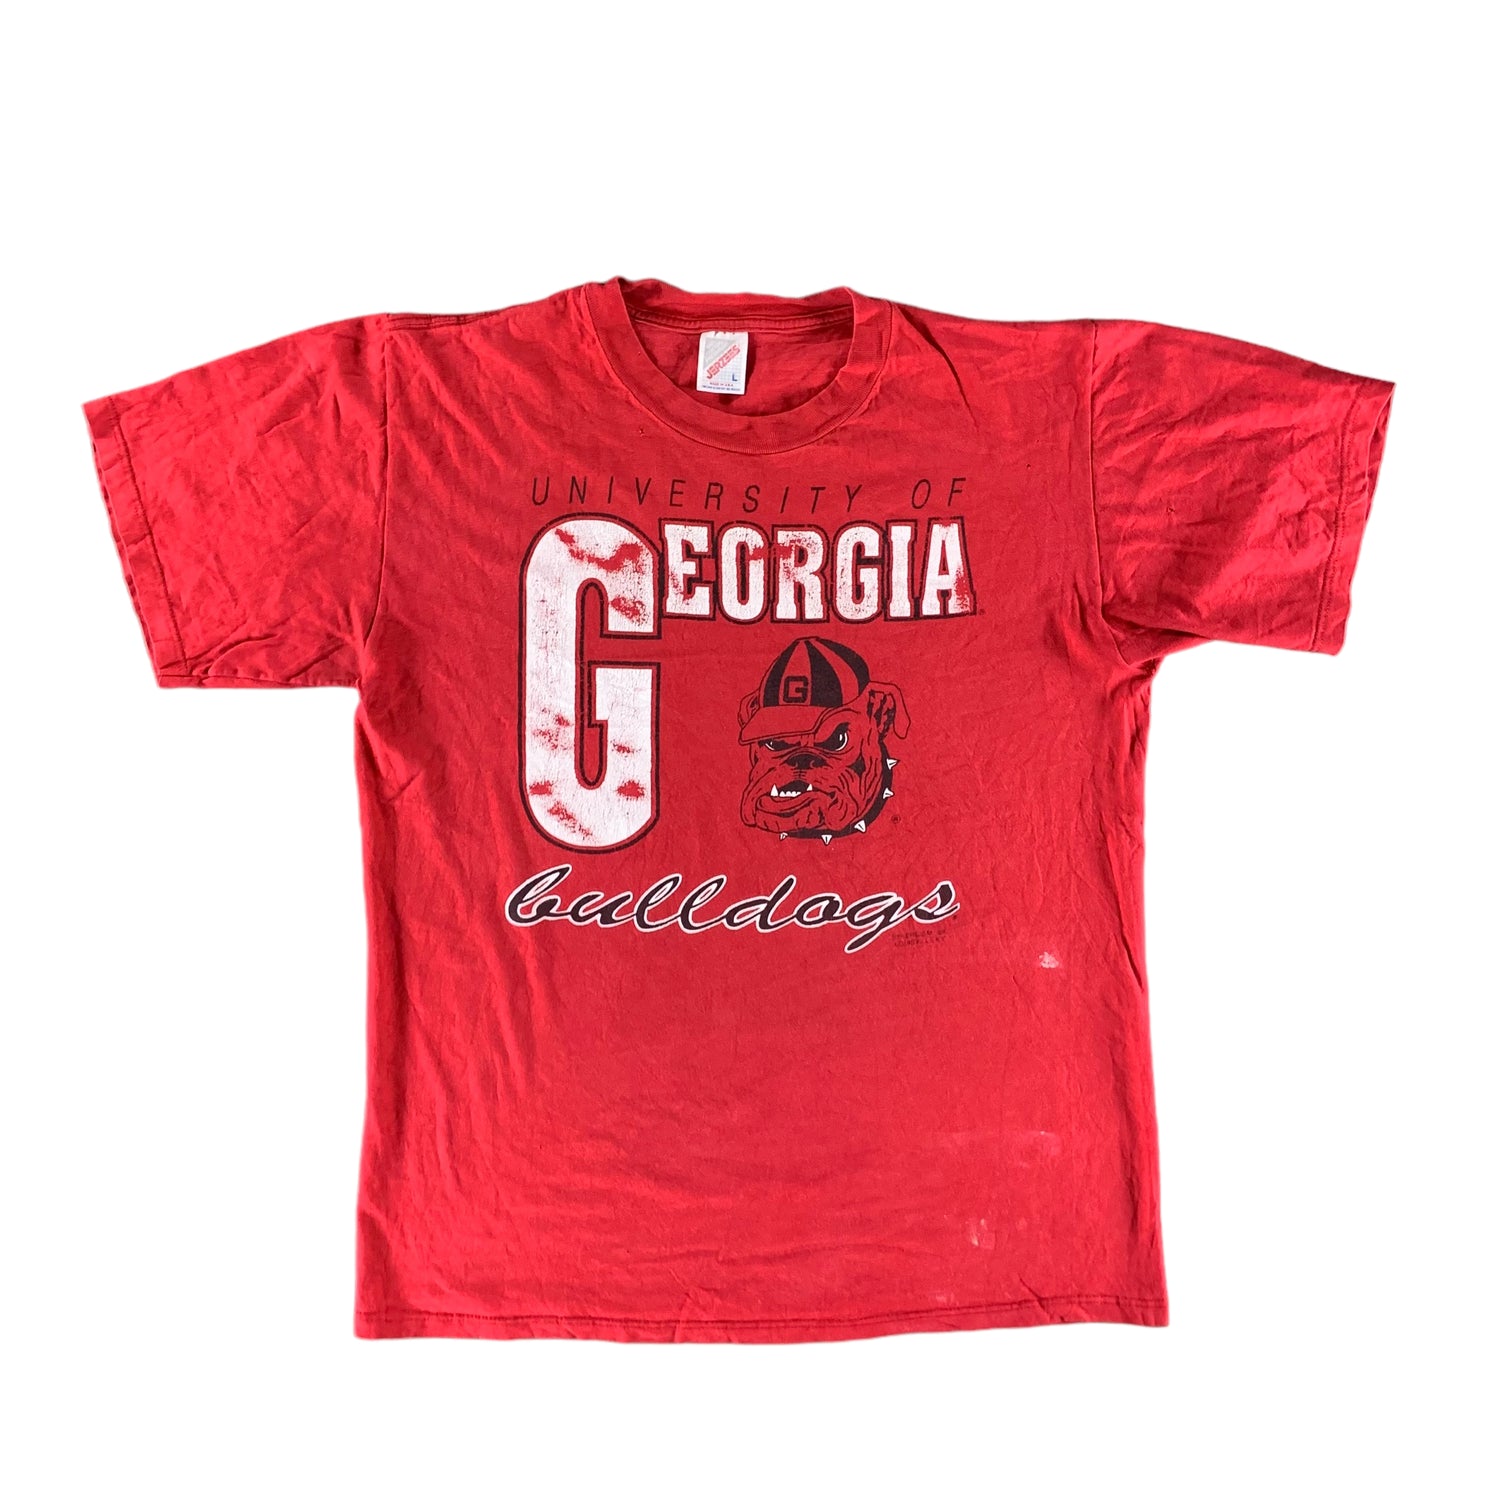 Vintage 1990s University of Georgia T-shirt size Large